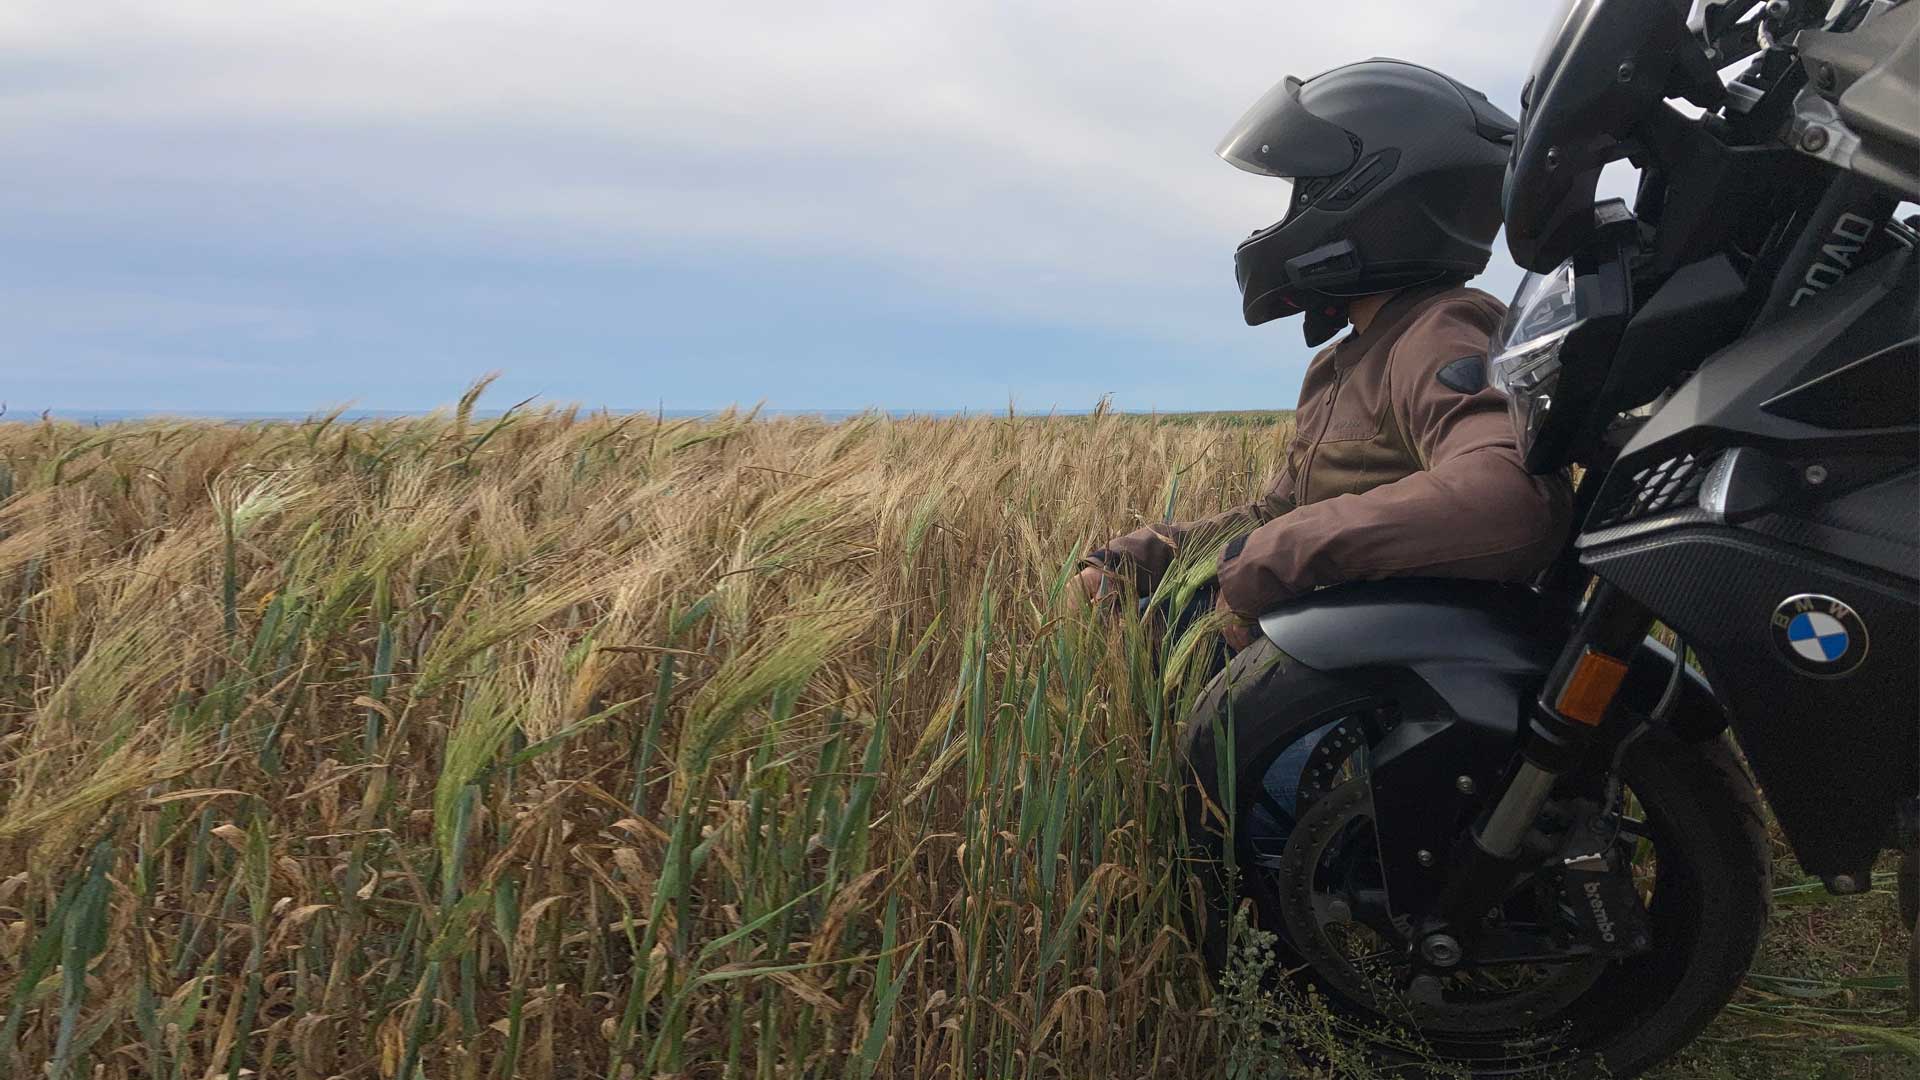 Solo motorcycle traveler in a field